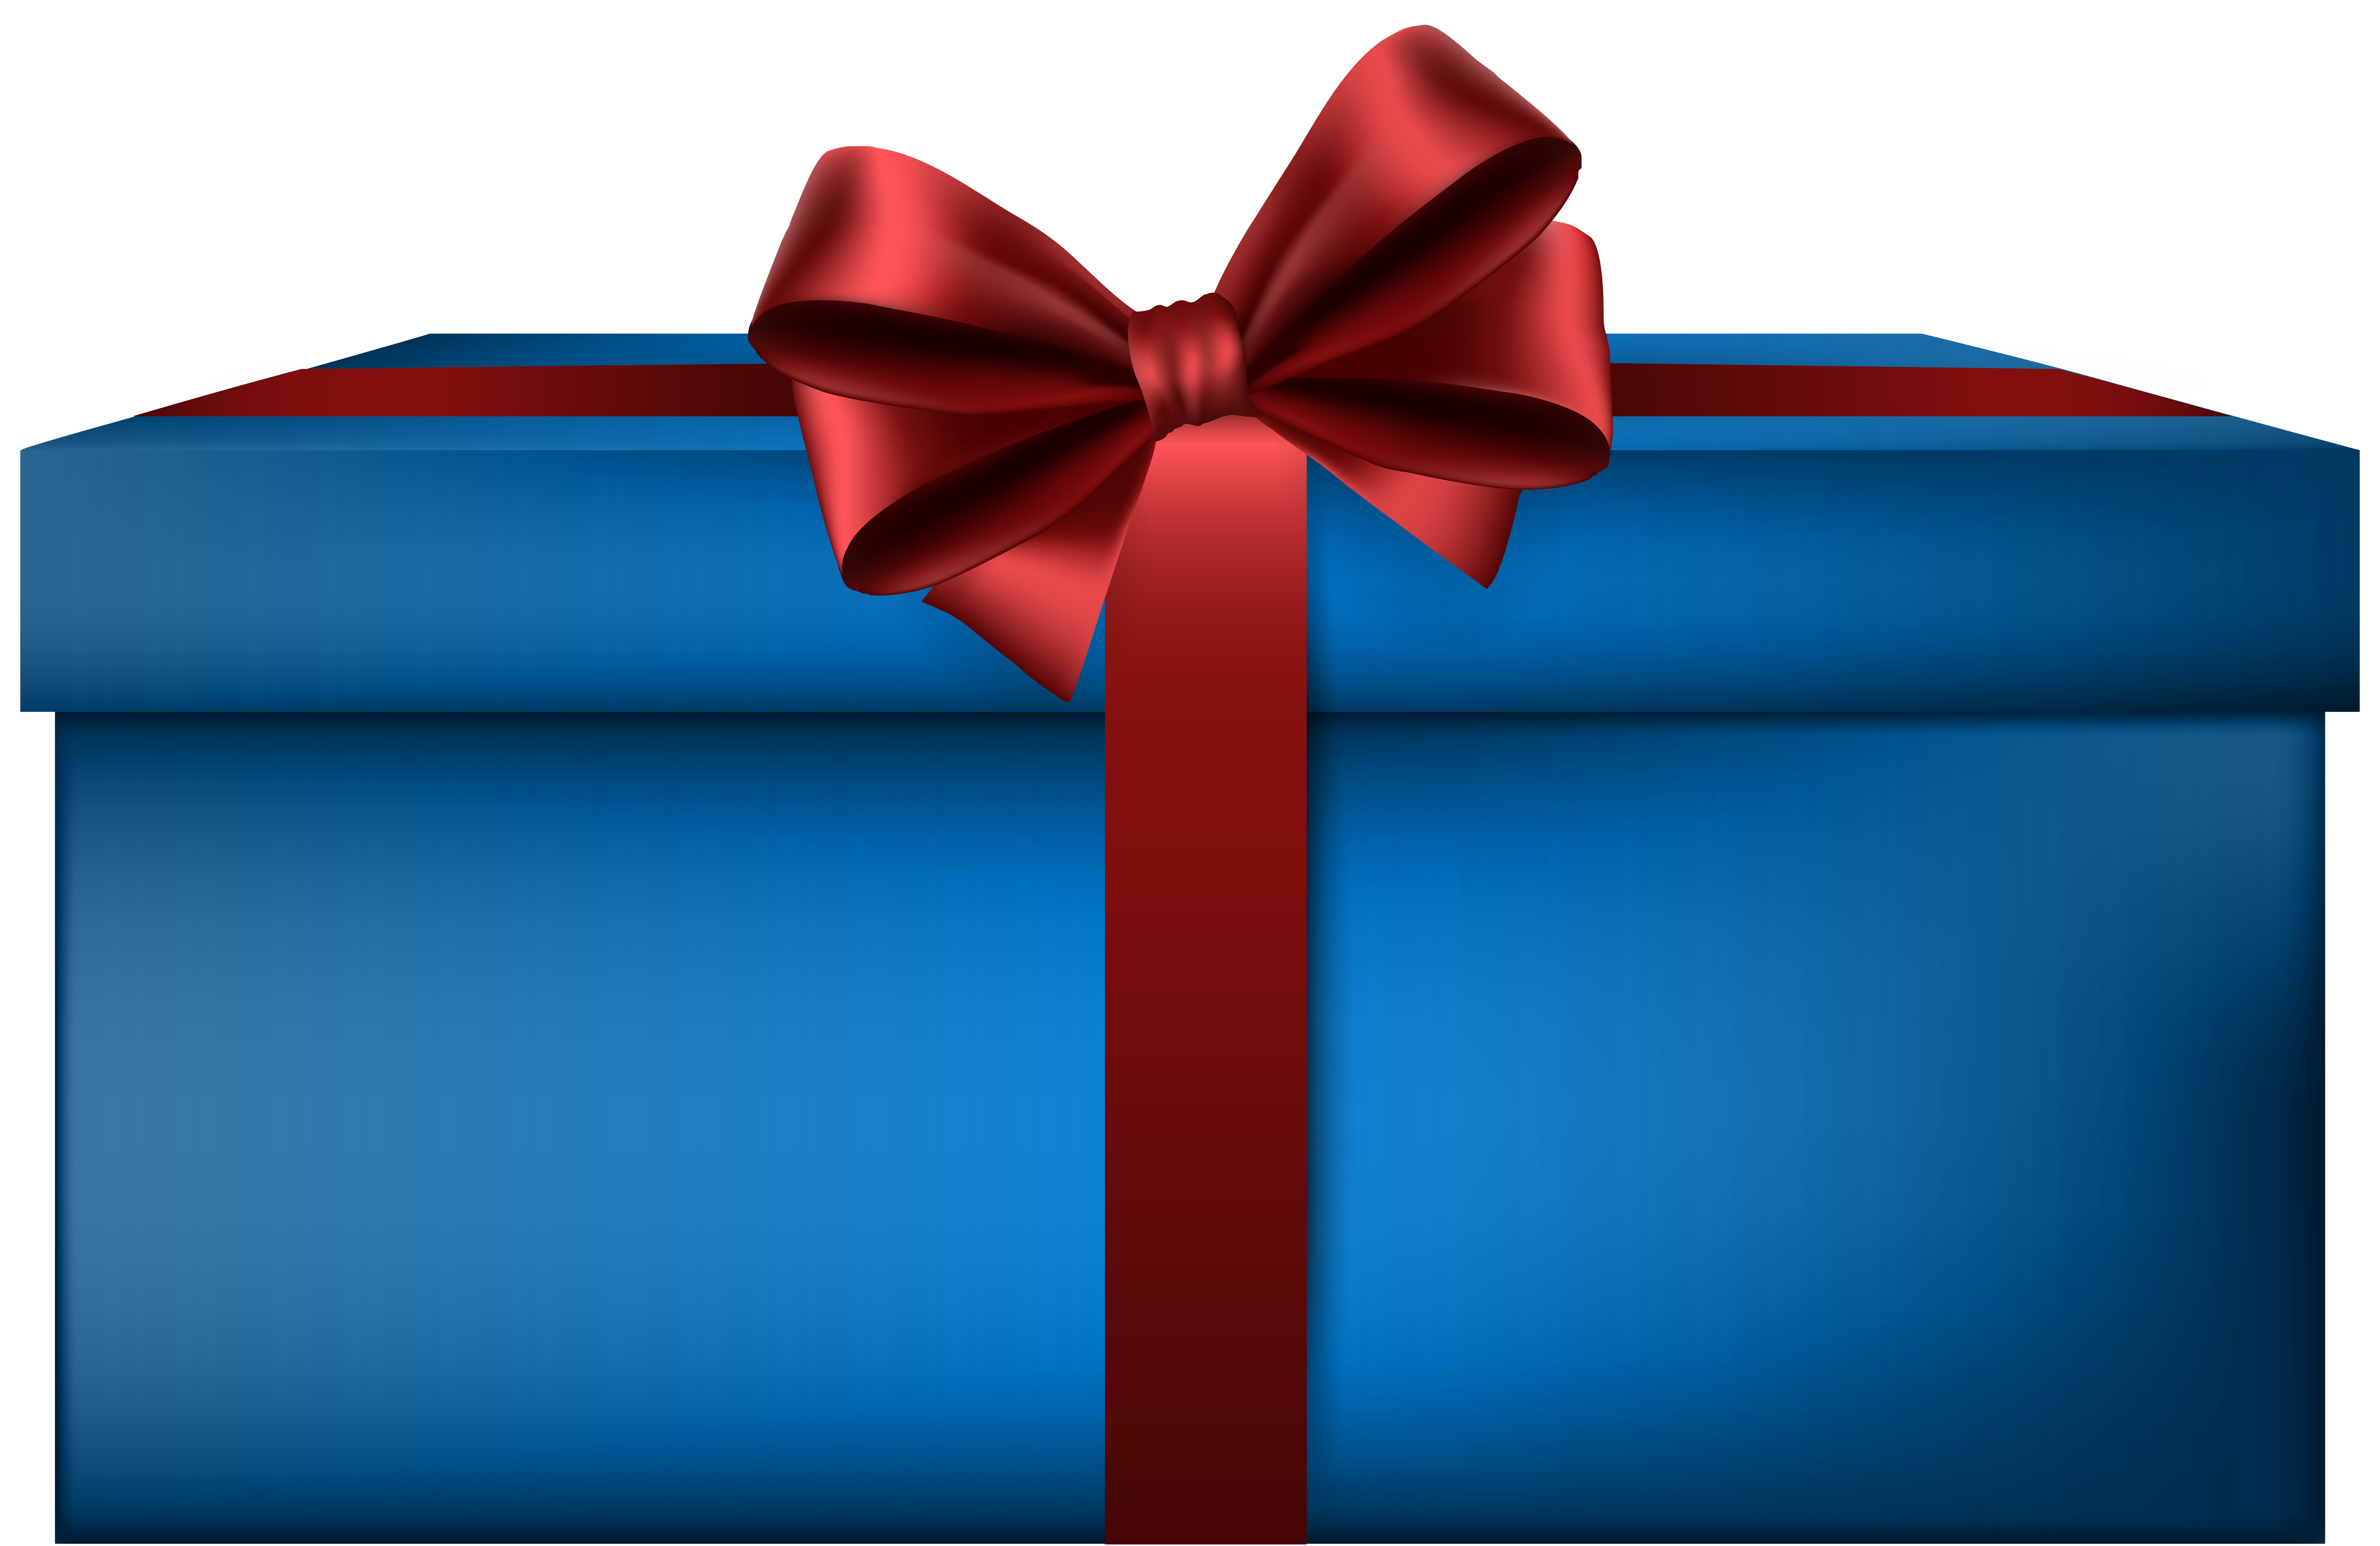 Elegant Blue Gift Box PNG Clip Art Image